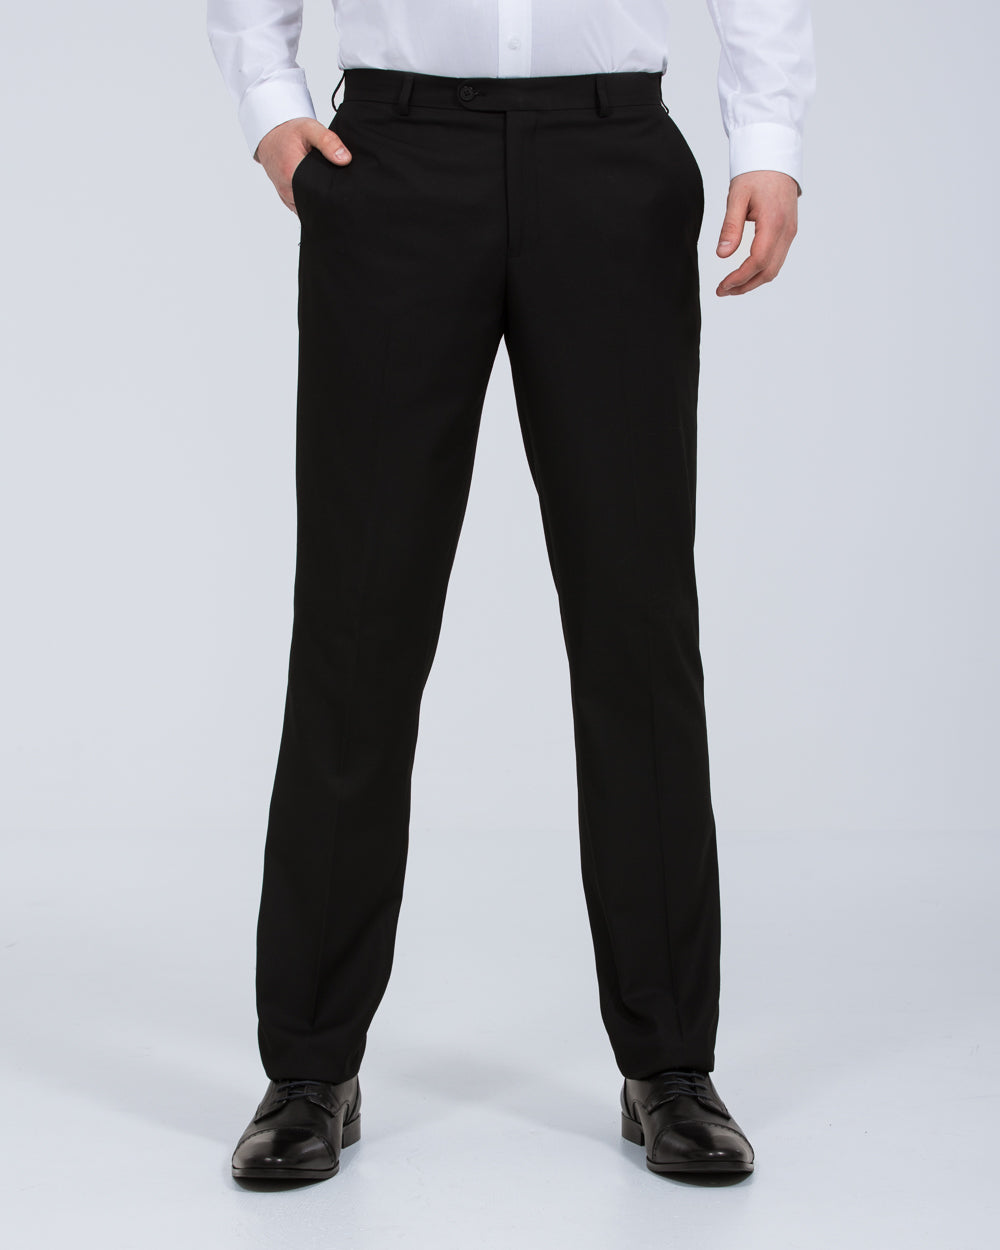 Skopes Romulus Slim Fit Tall Lyfcycle Suit (black)